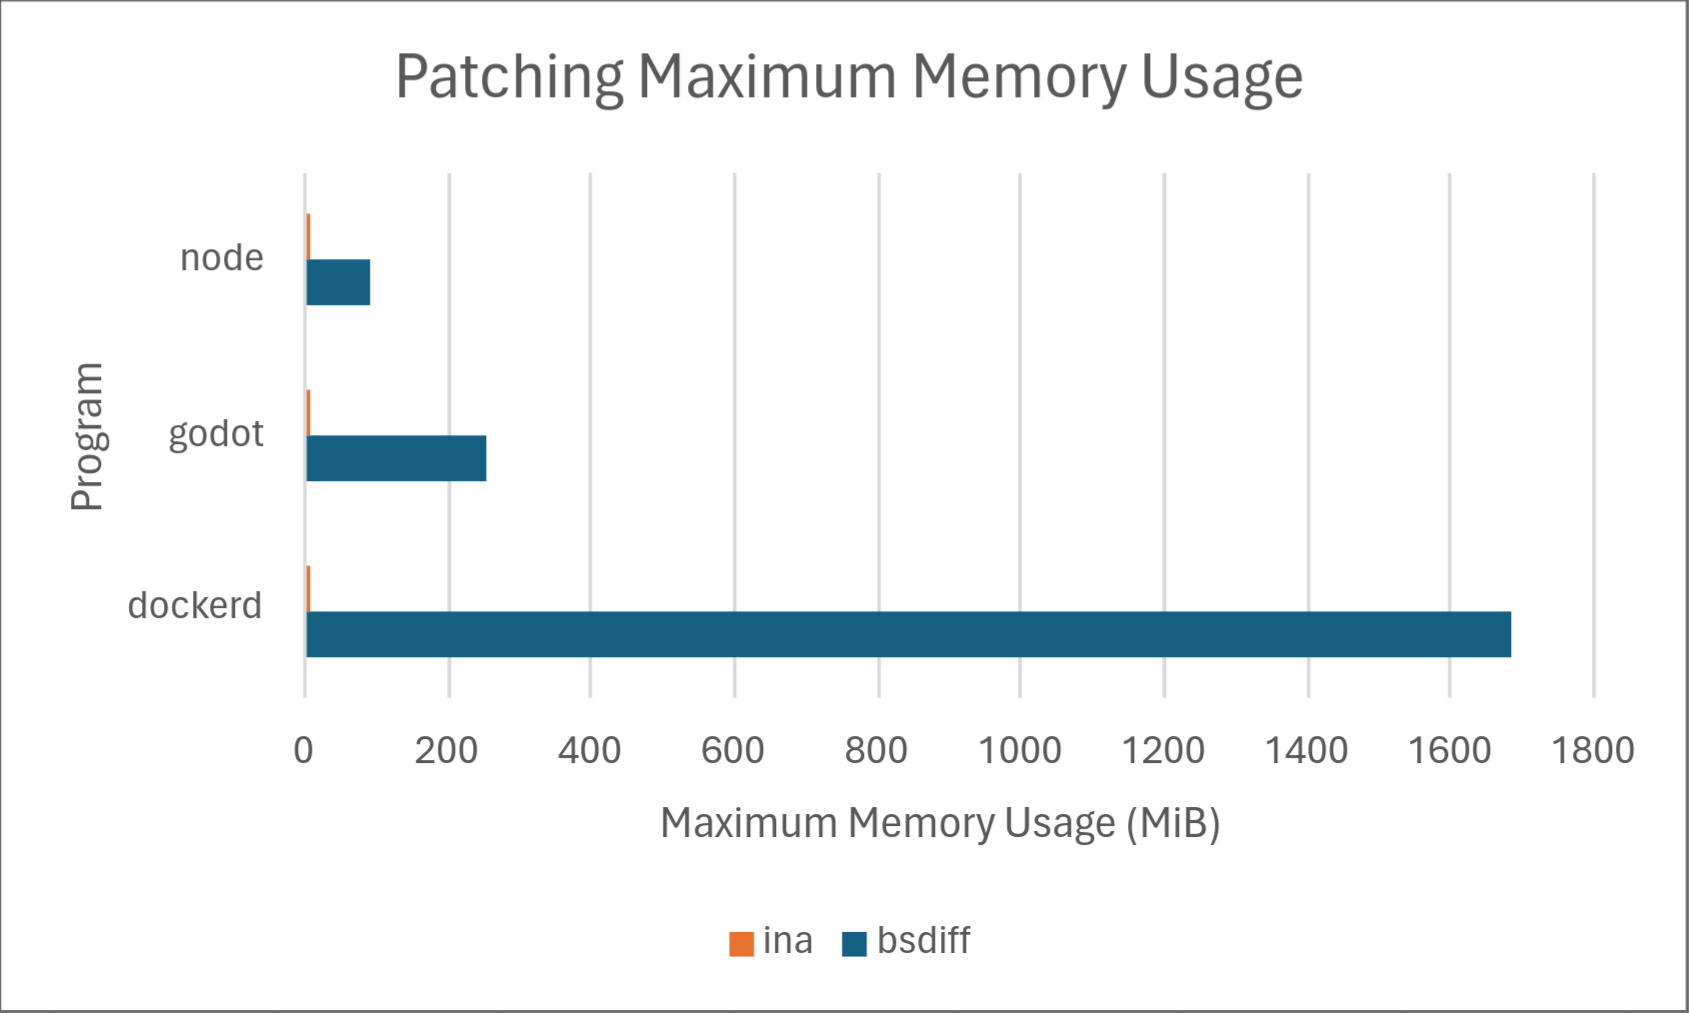 Patching maximum memory usage performance chart